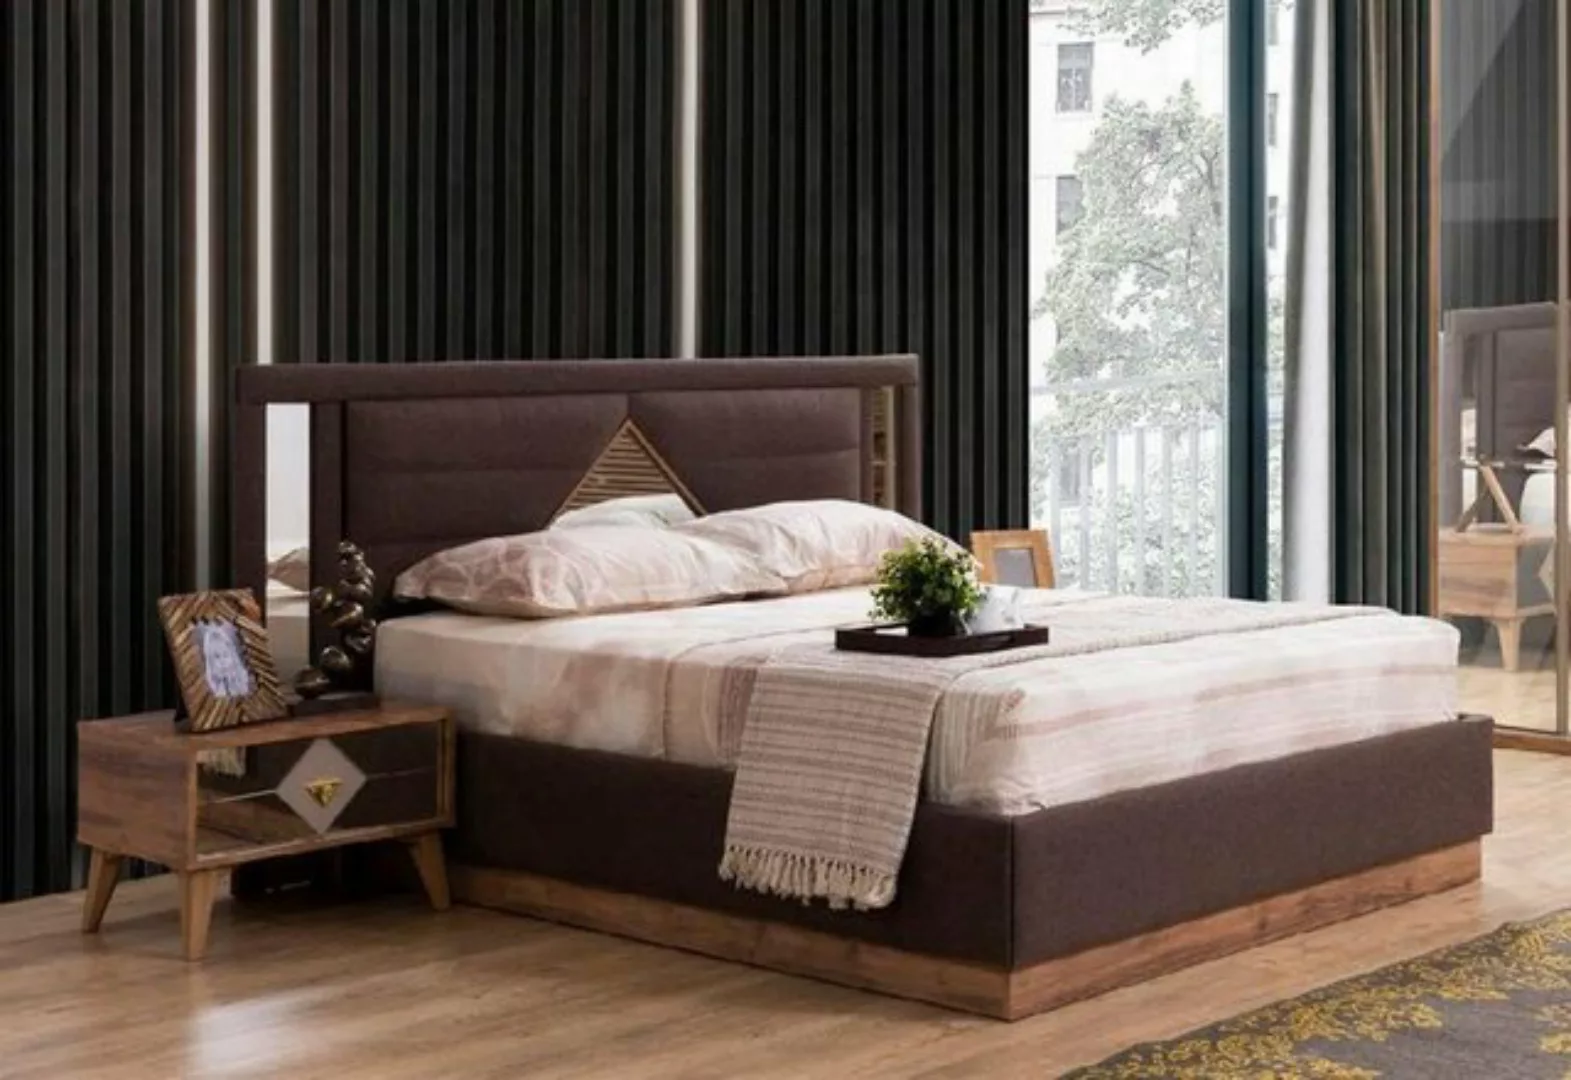 JVmoebel Bett Bett Luxus Betten Holz Bettrahmen Design Modern Bettgestelle günstig online kaufen